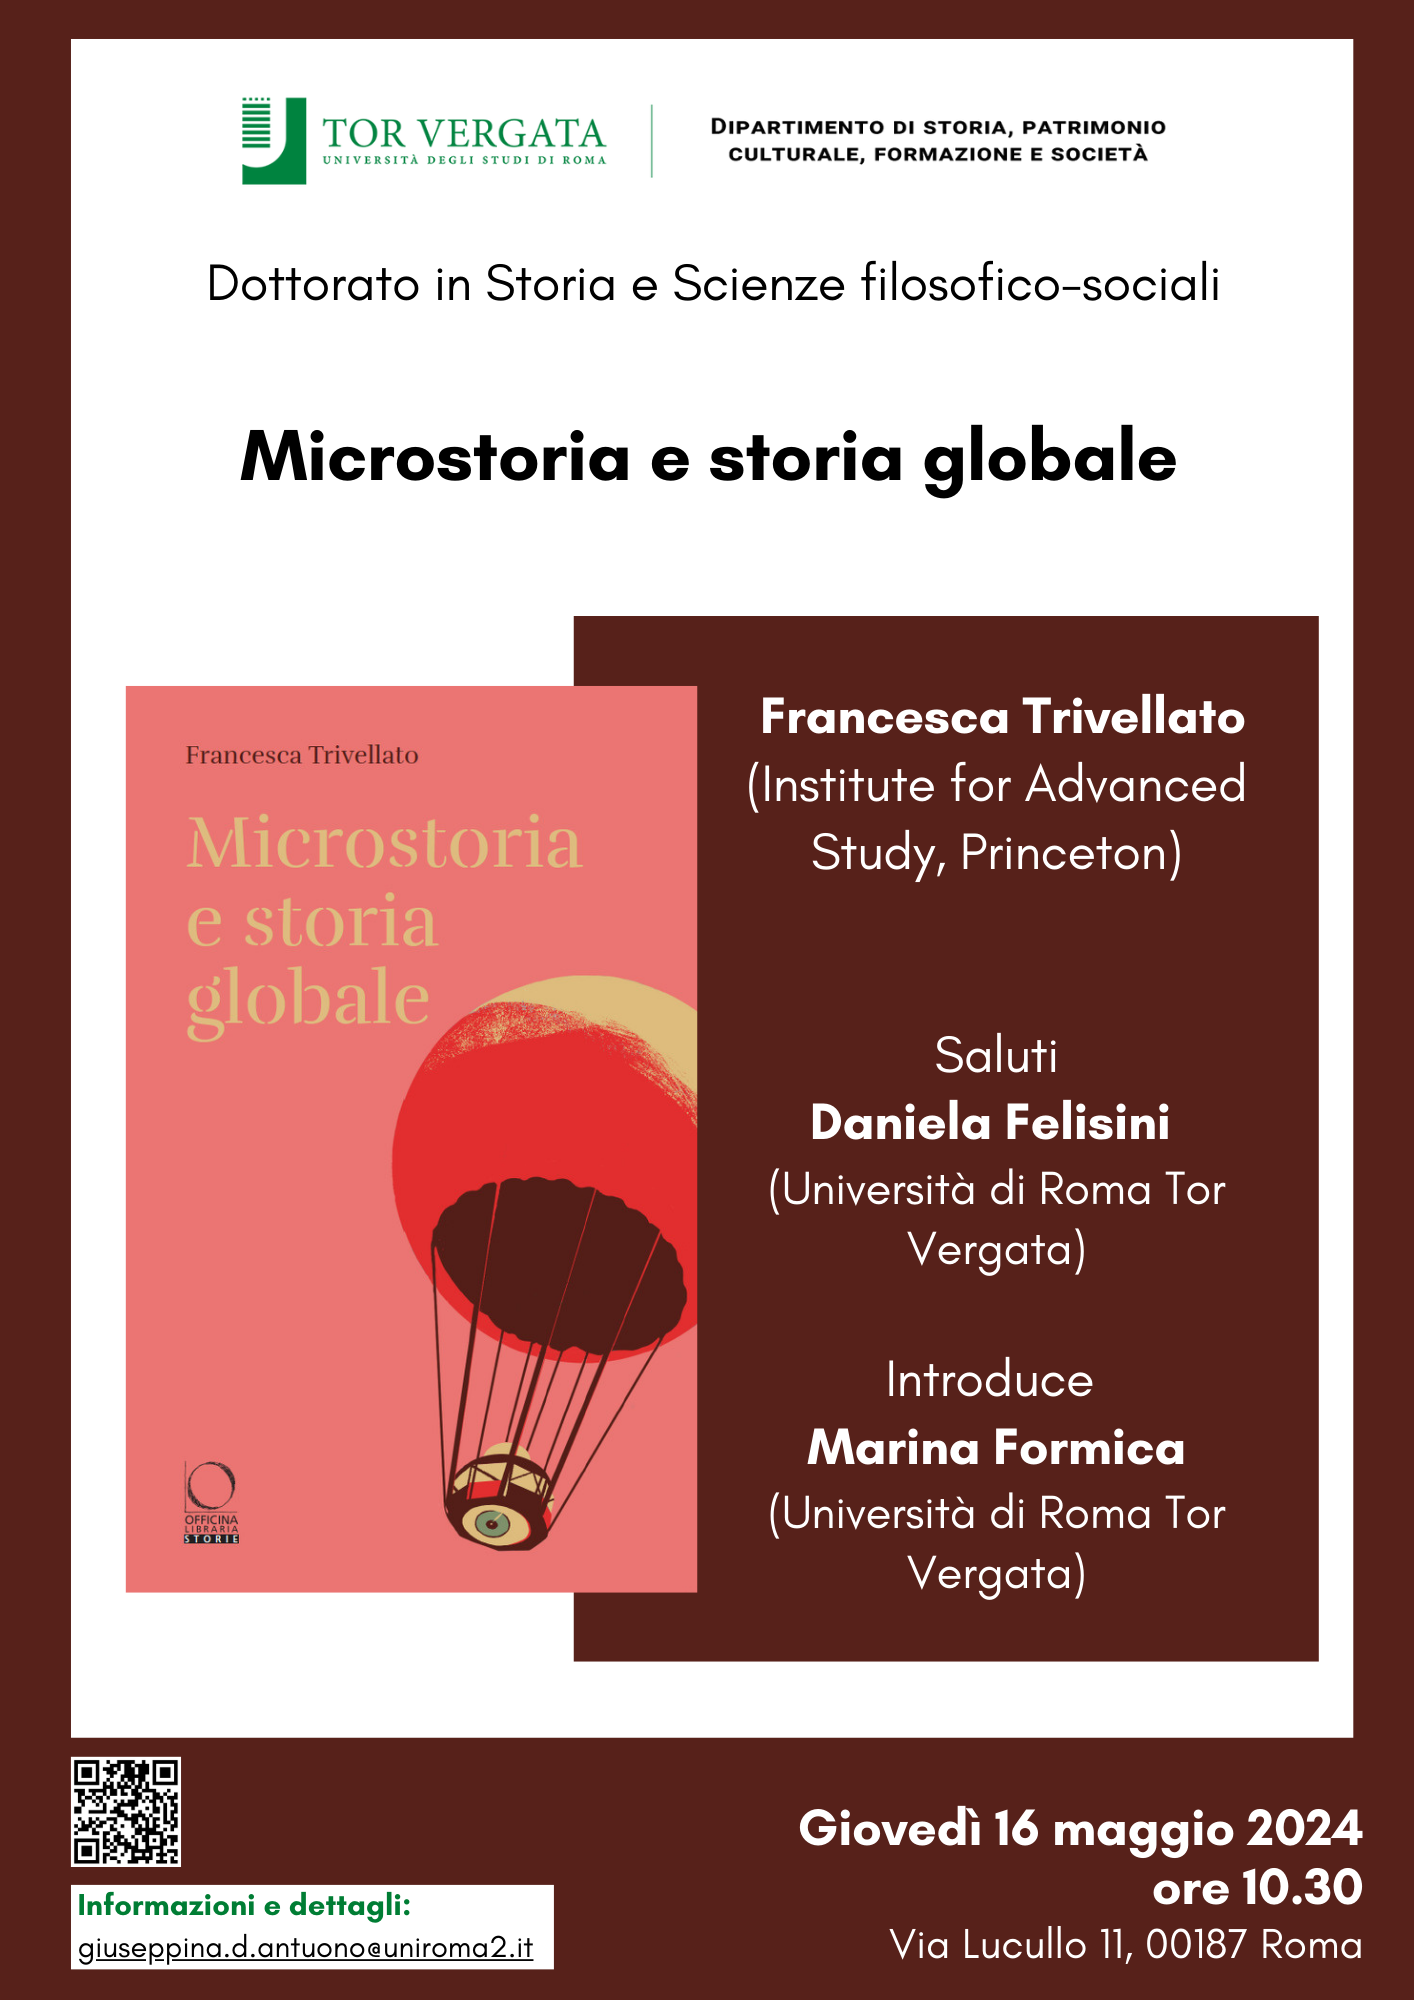 Microstoria e storia globale